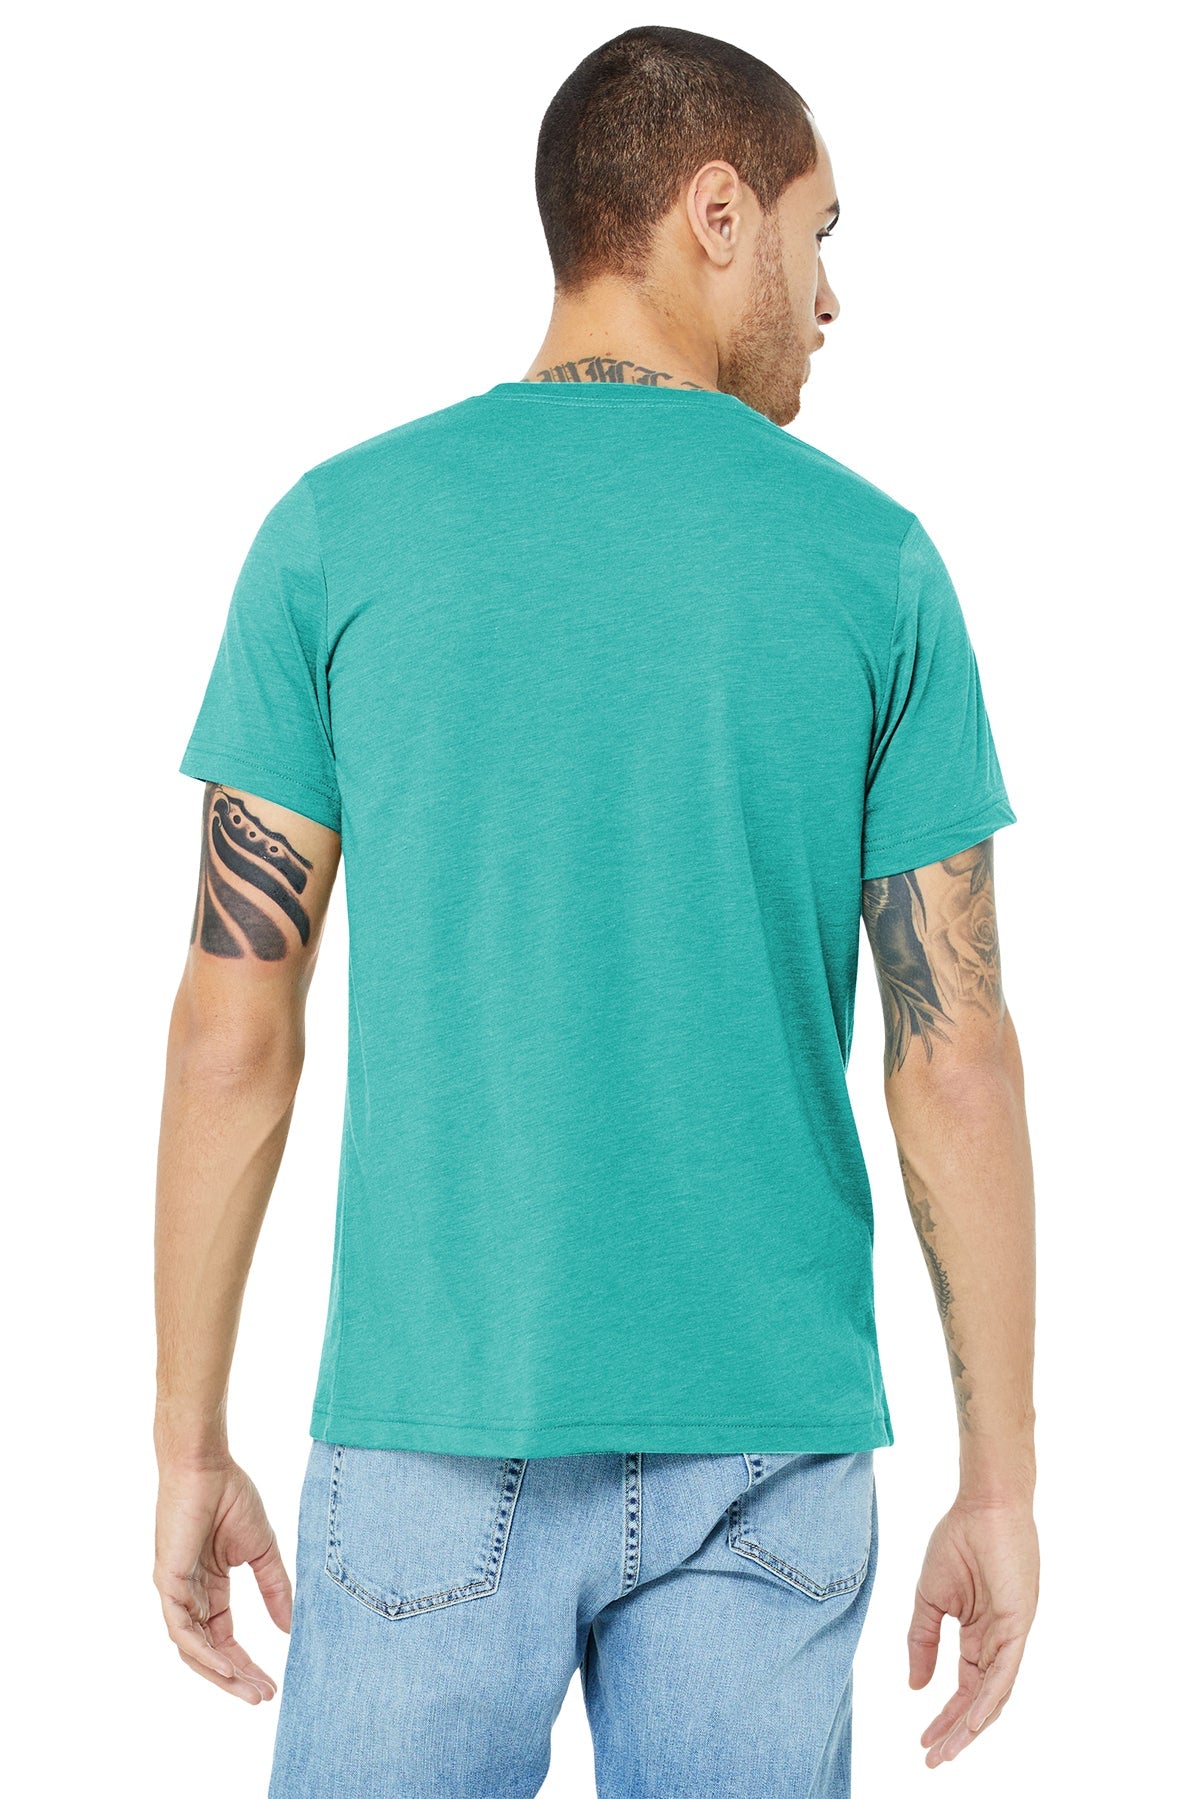 bella + canvas unisex triblend short sleeve t-shirt 3413c sea green trblnd